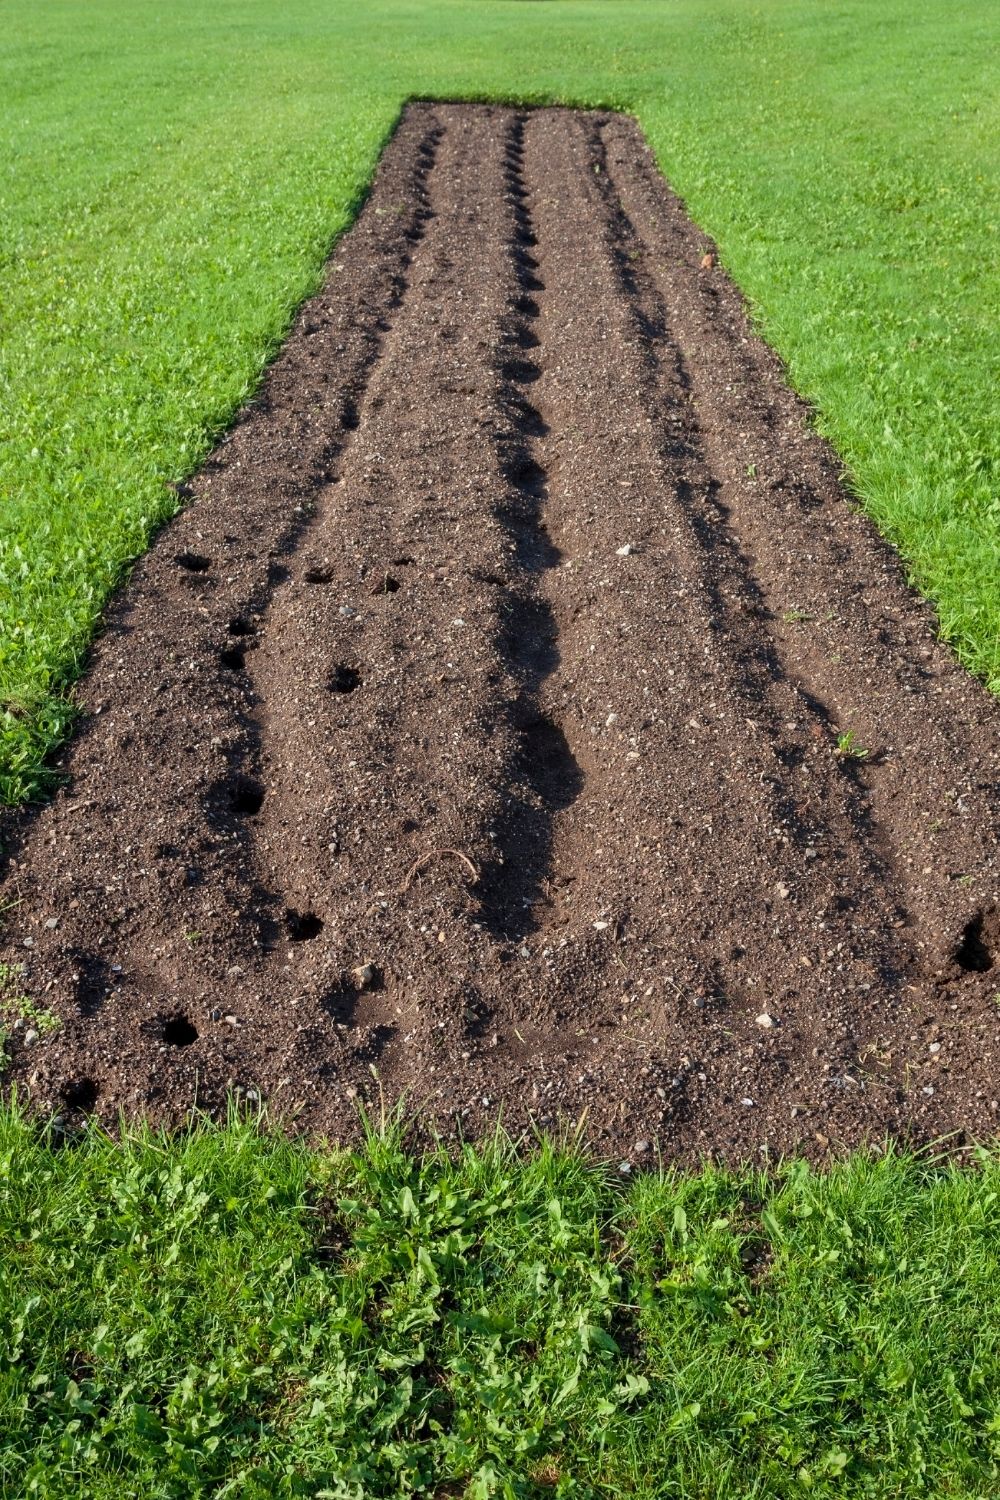 Vermicomposting- a trick to build healthy, fertile soil